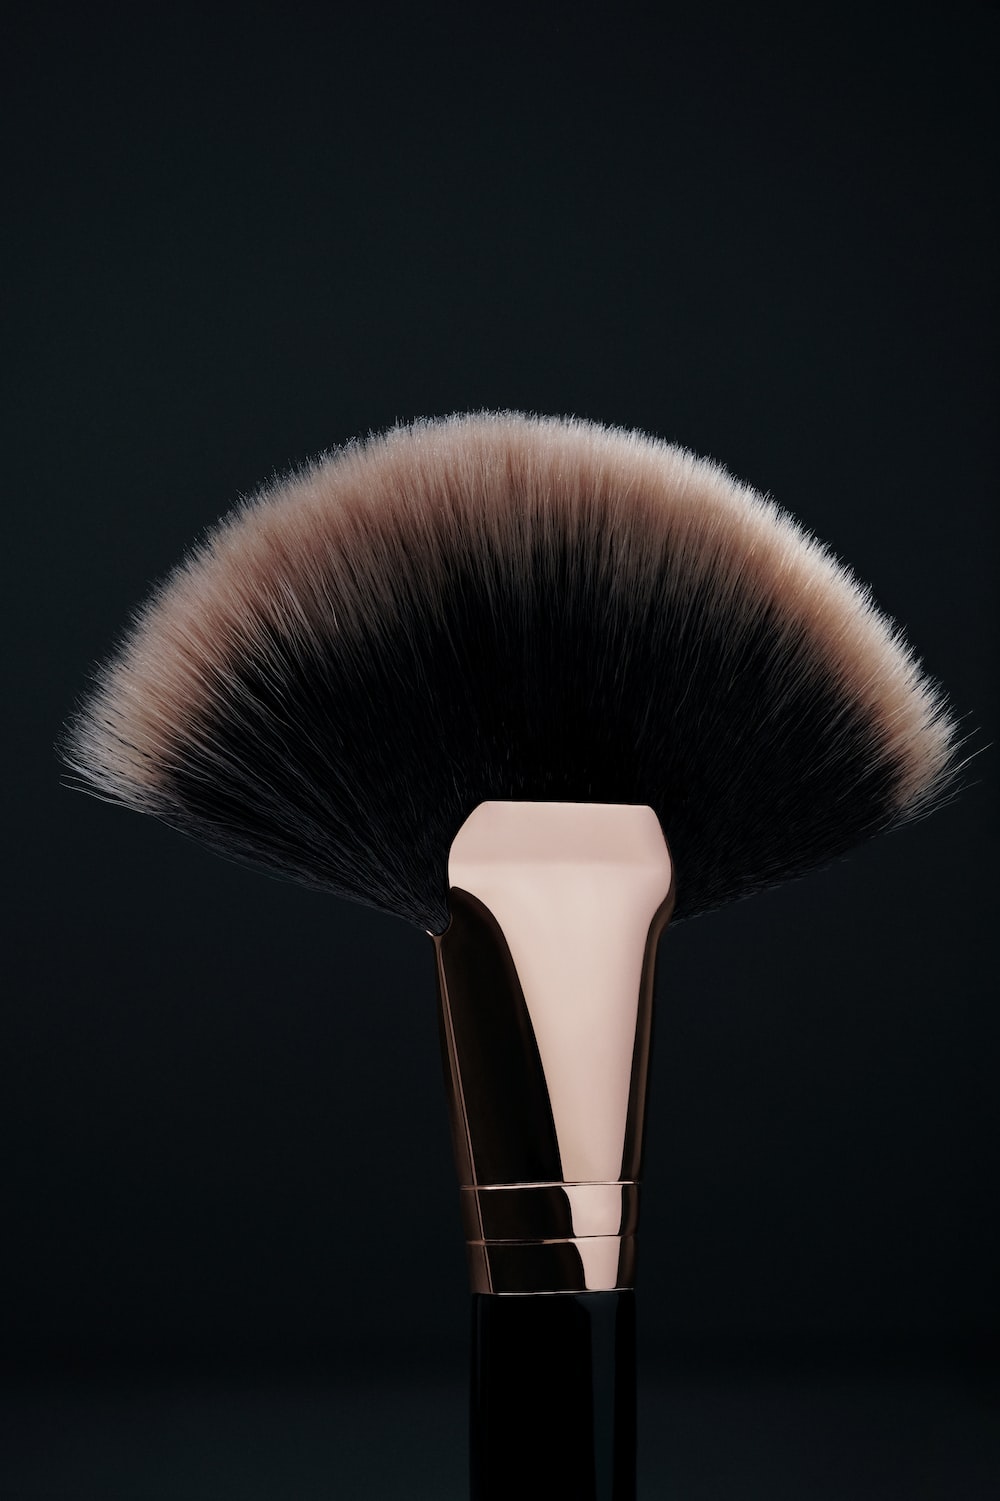 Make Up Brush Picture. Download Free Image